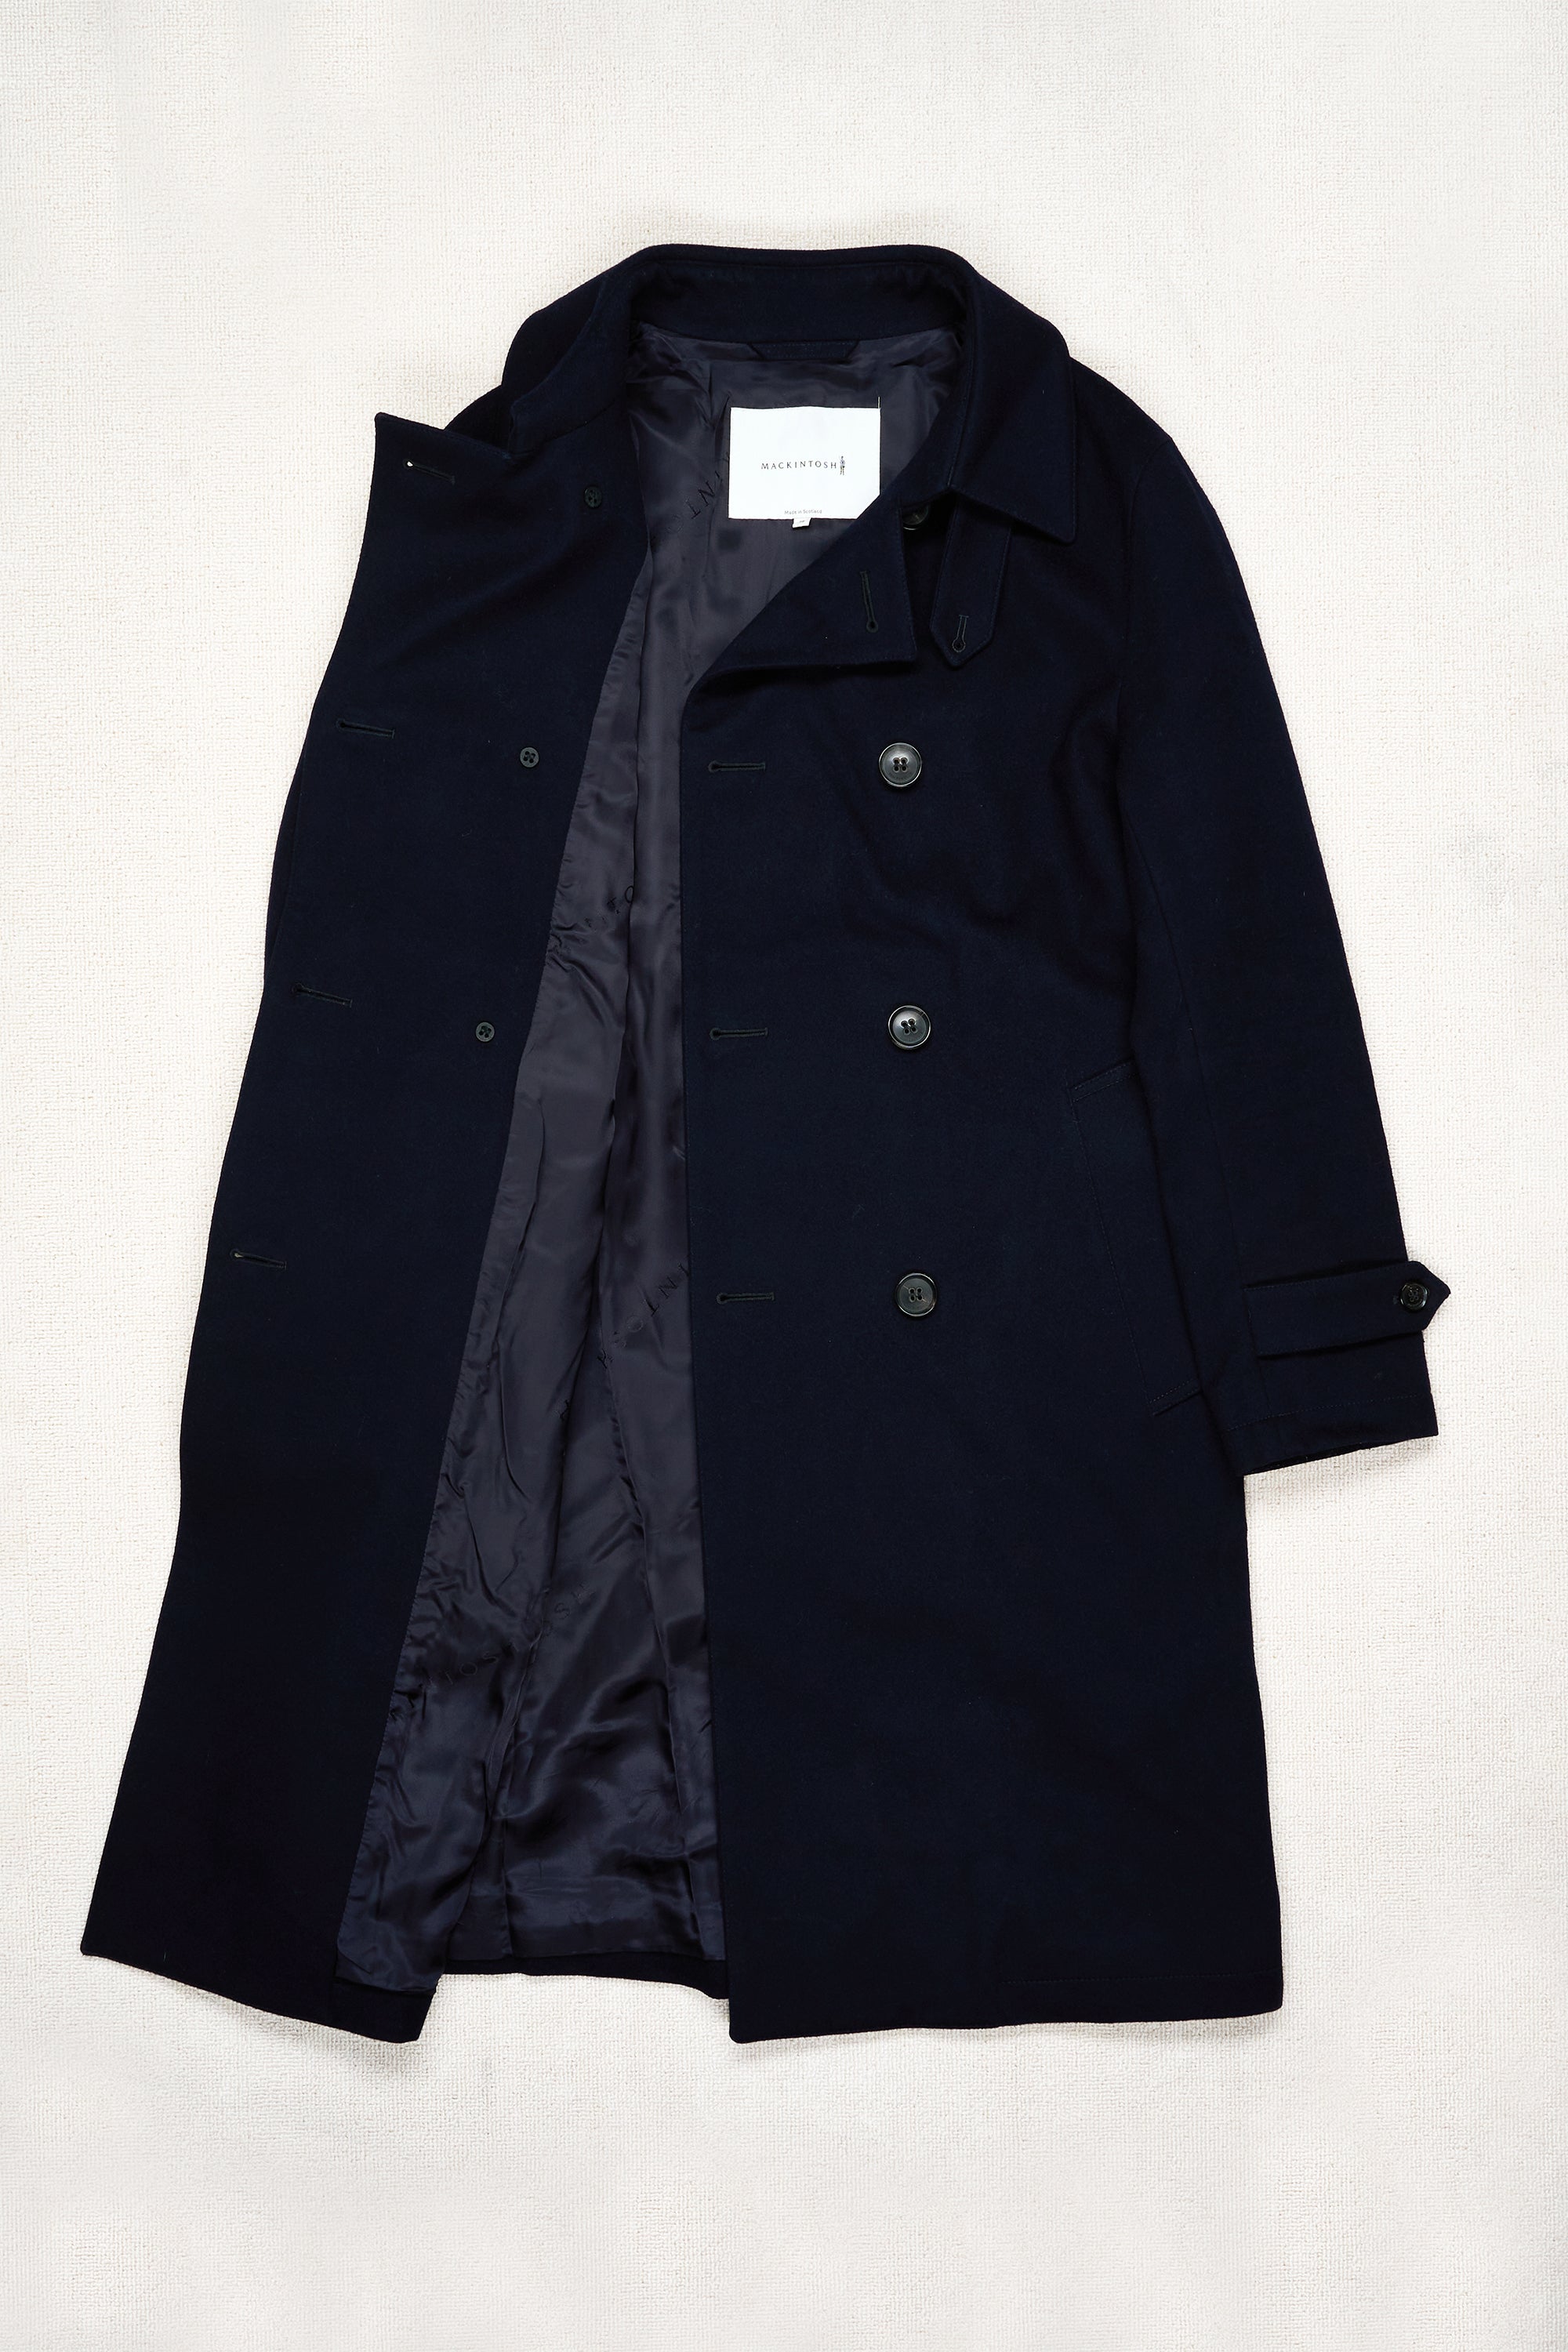 Mackintosh Navy Wool Double Breasted Overcoat